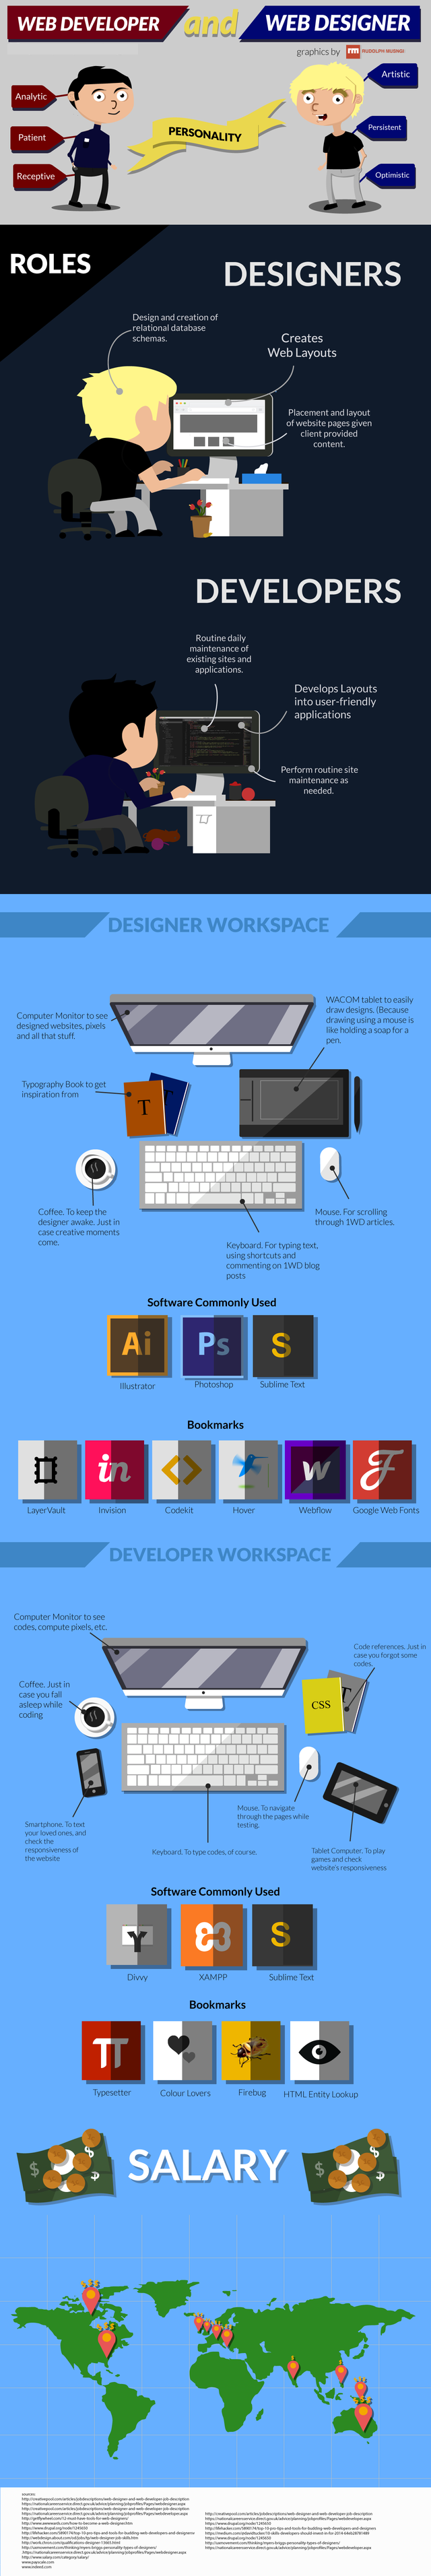 Infographic - Web Designer Vs. Web Developer